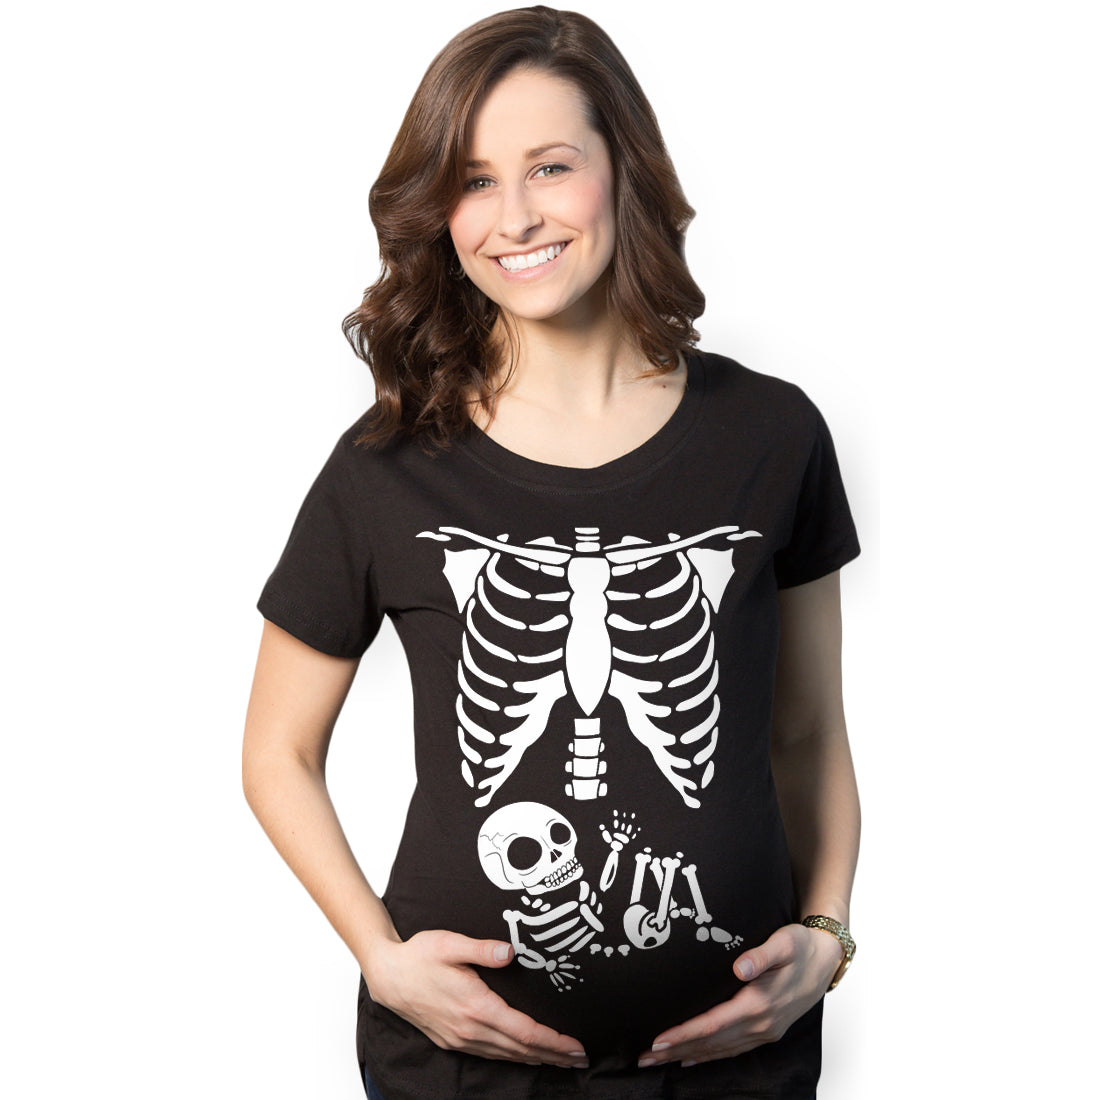 Funny Black White Skeleton Rib Cage Maternity T Shirt Nerdy Halloween Tee